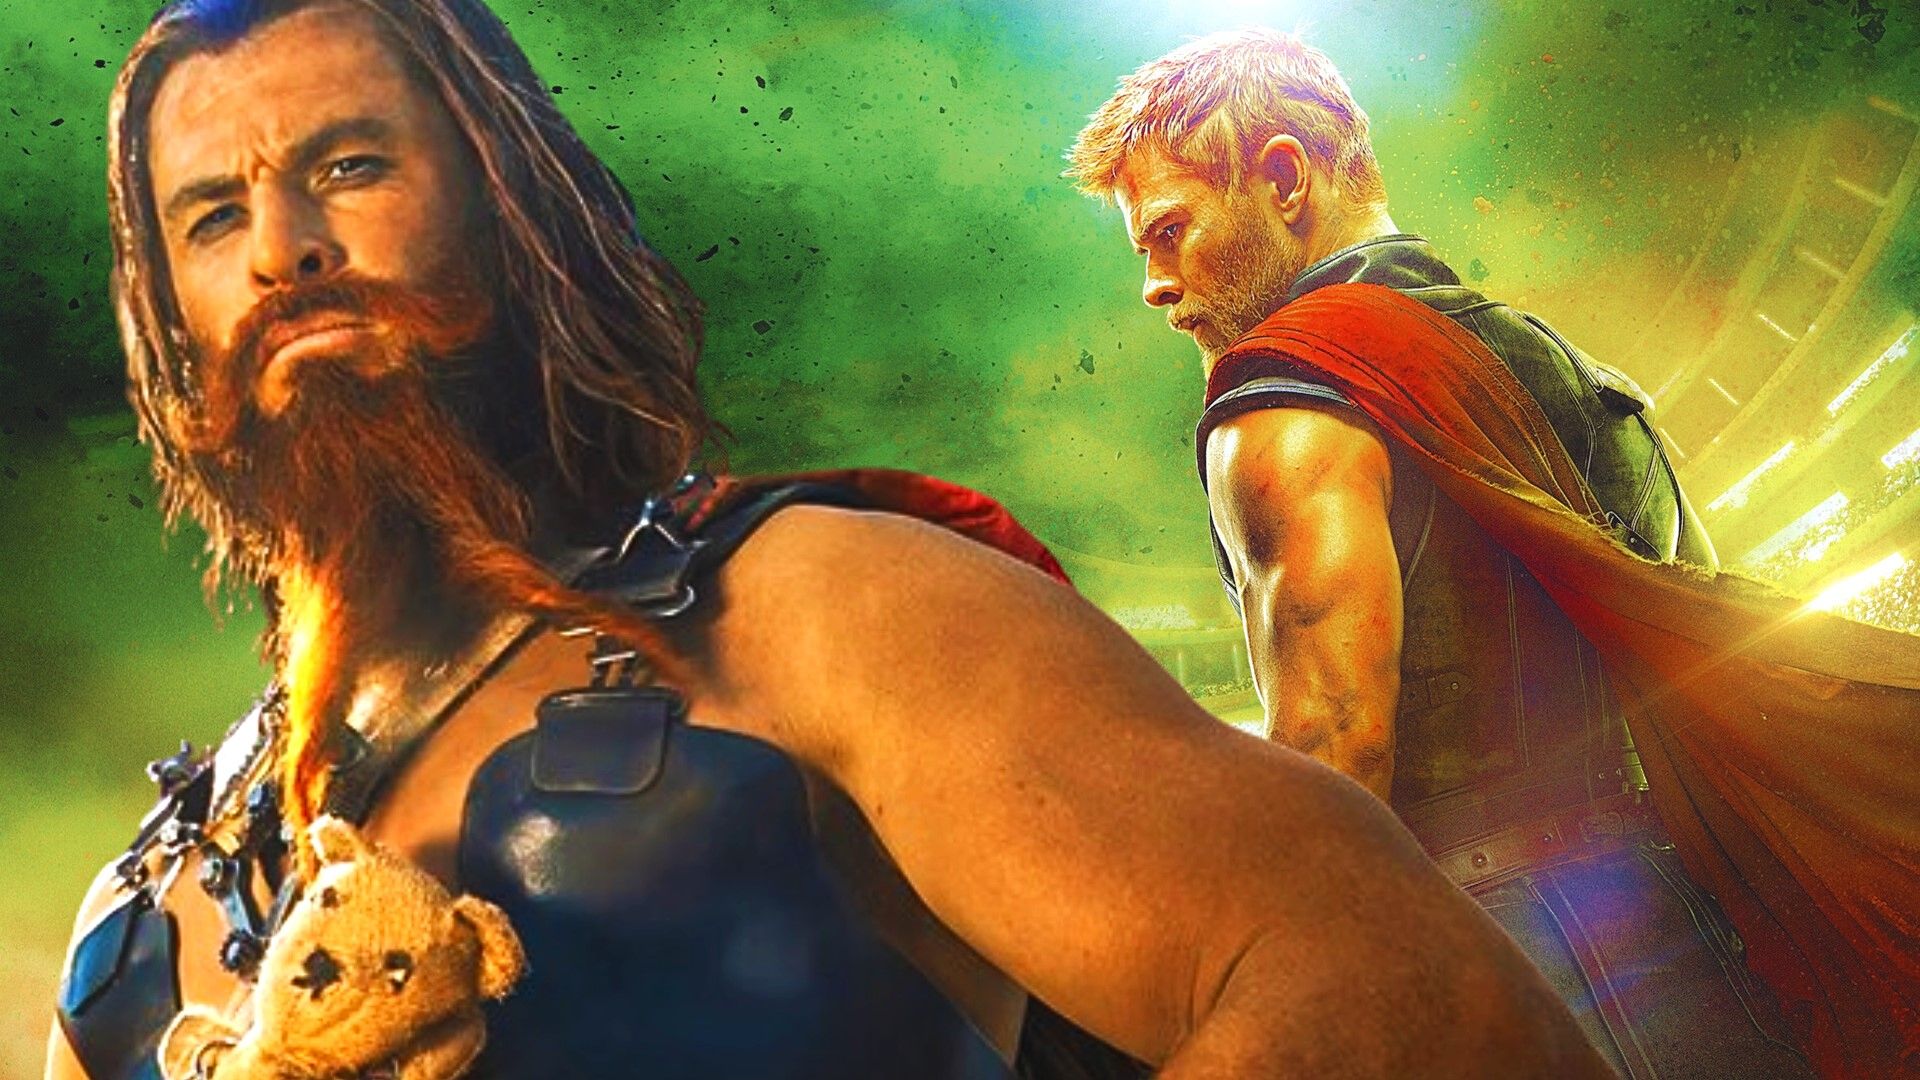 Chris Hemsworth in Furiosa and as Thor.